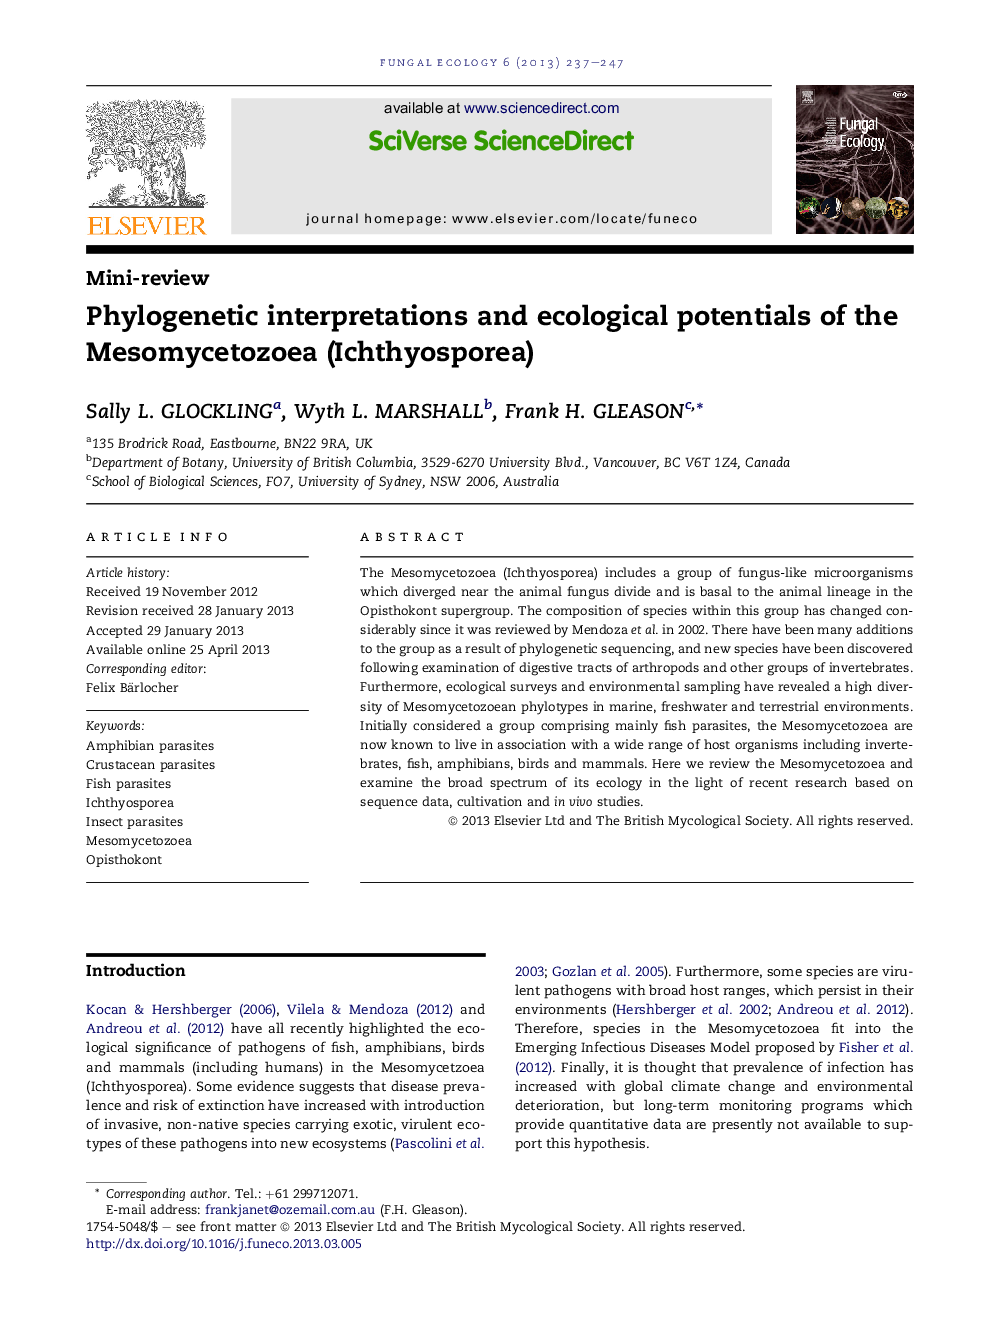 Phylogenetic interpretations and ecological potentials of the Mesomycetozoea (Ichthyosporea)